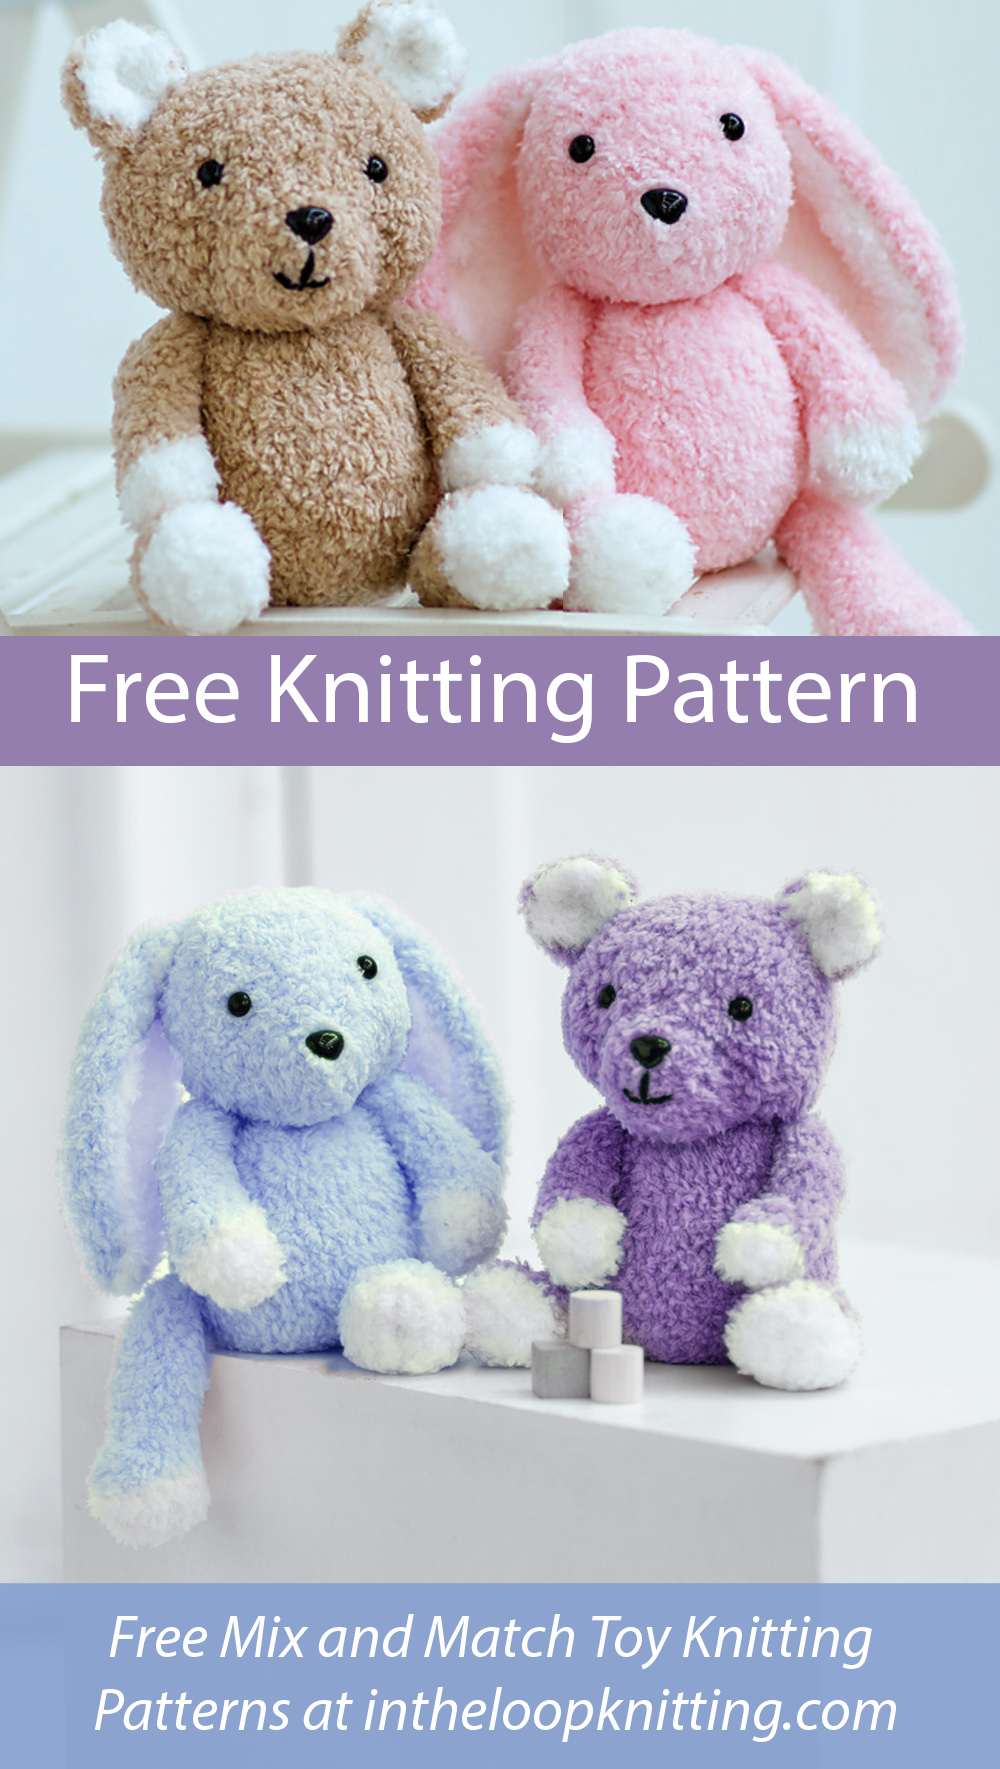 Free Teddy Bear and Bunny Rabbit Knitting Pattern Sirdar 2521